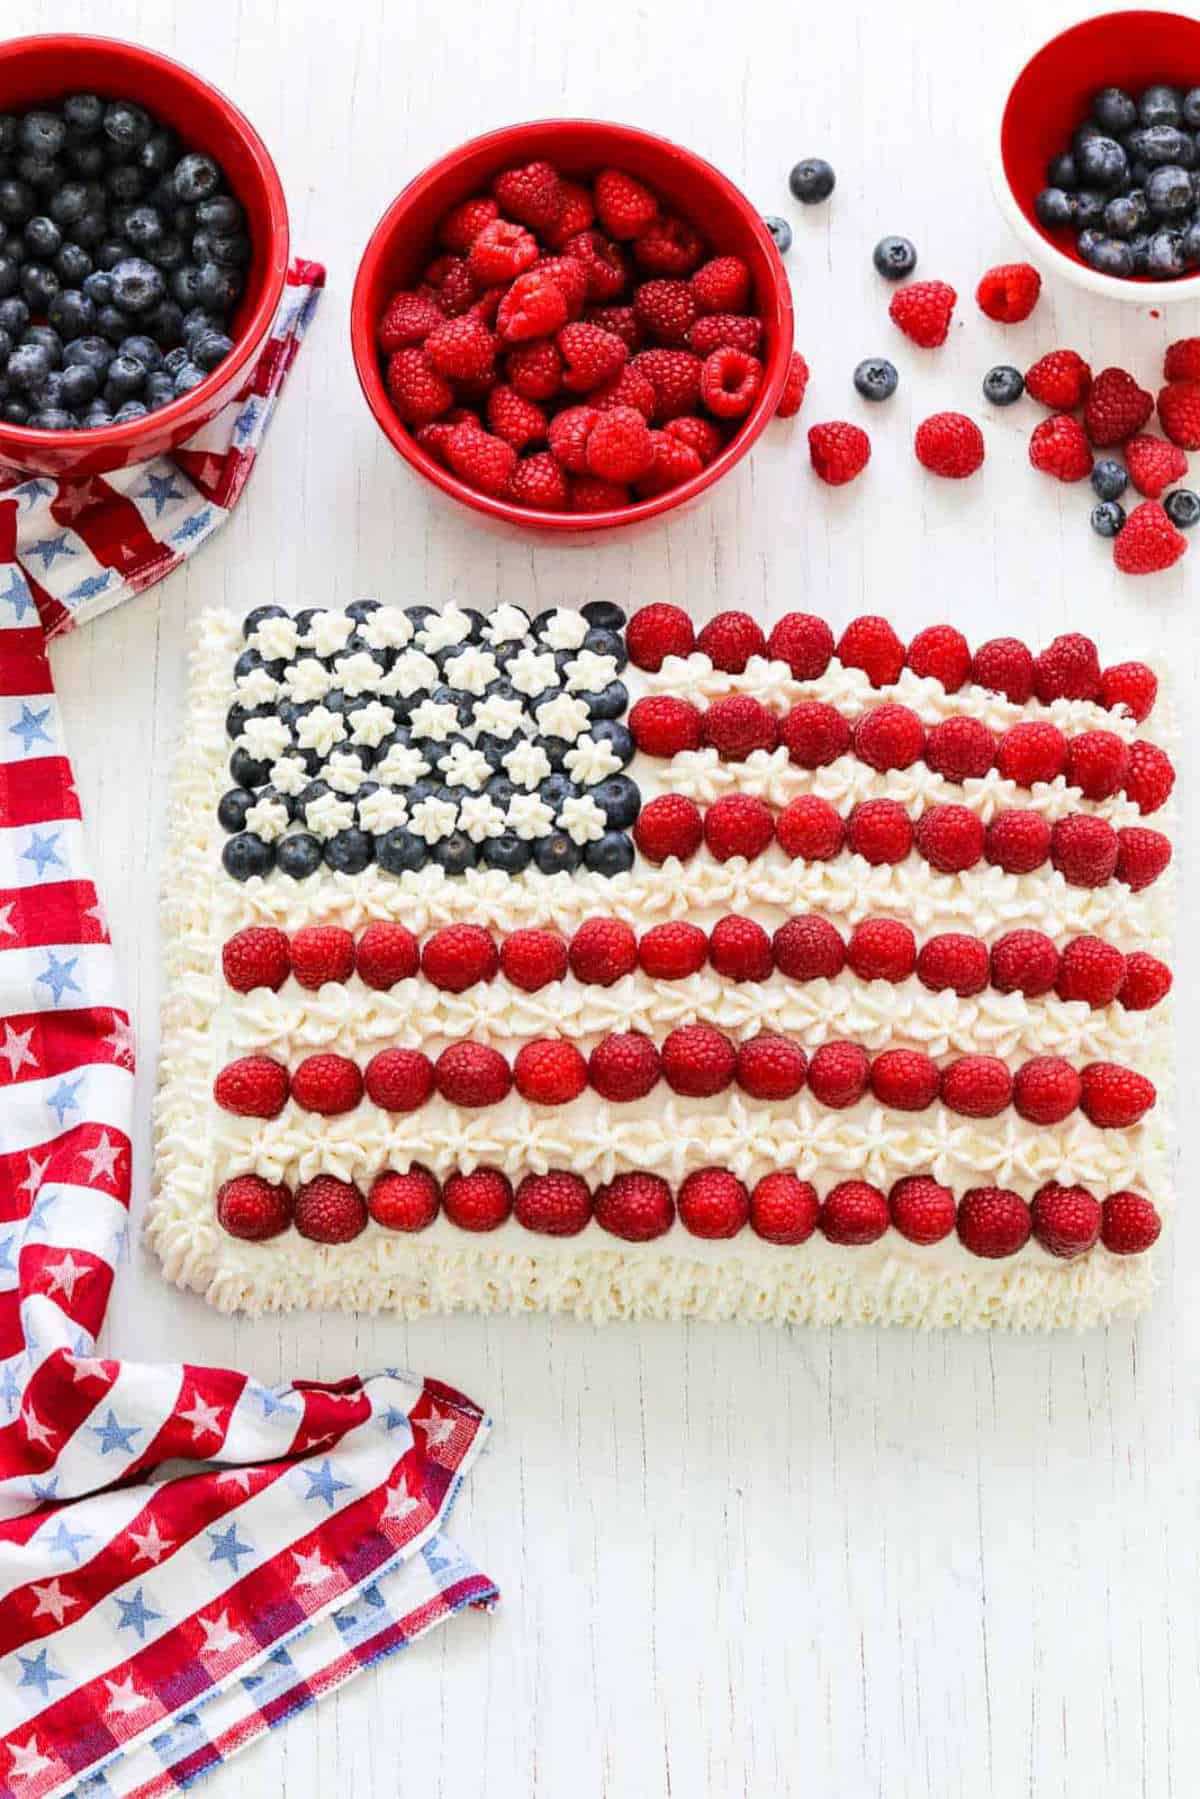 American flag sheet cake.